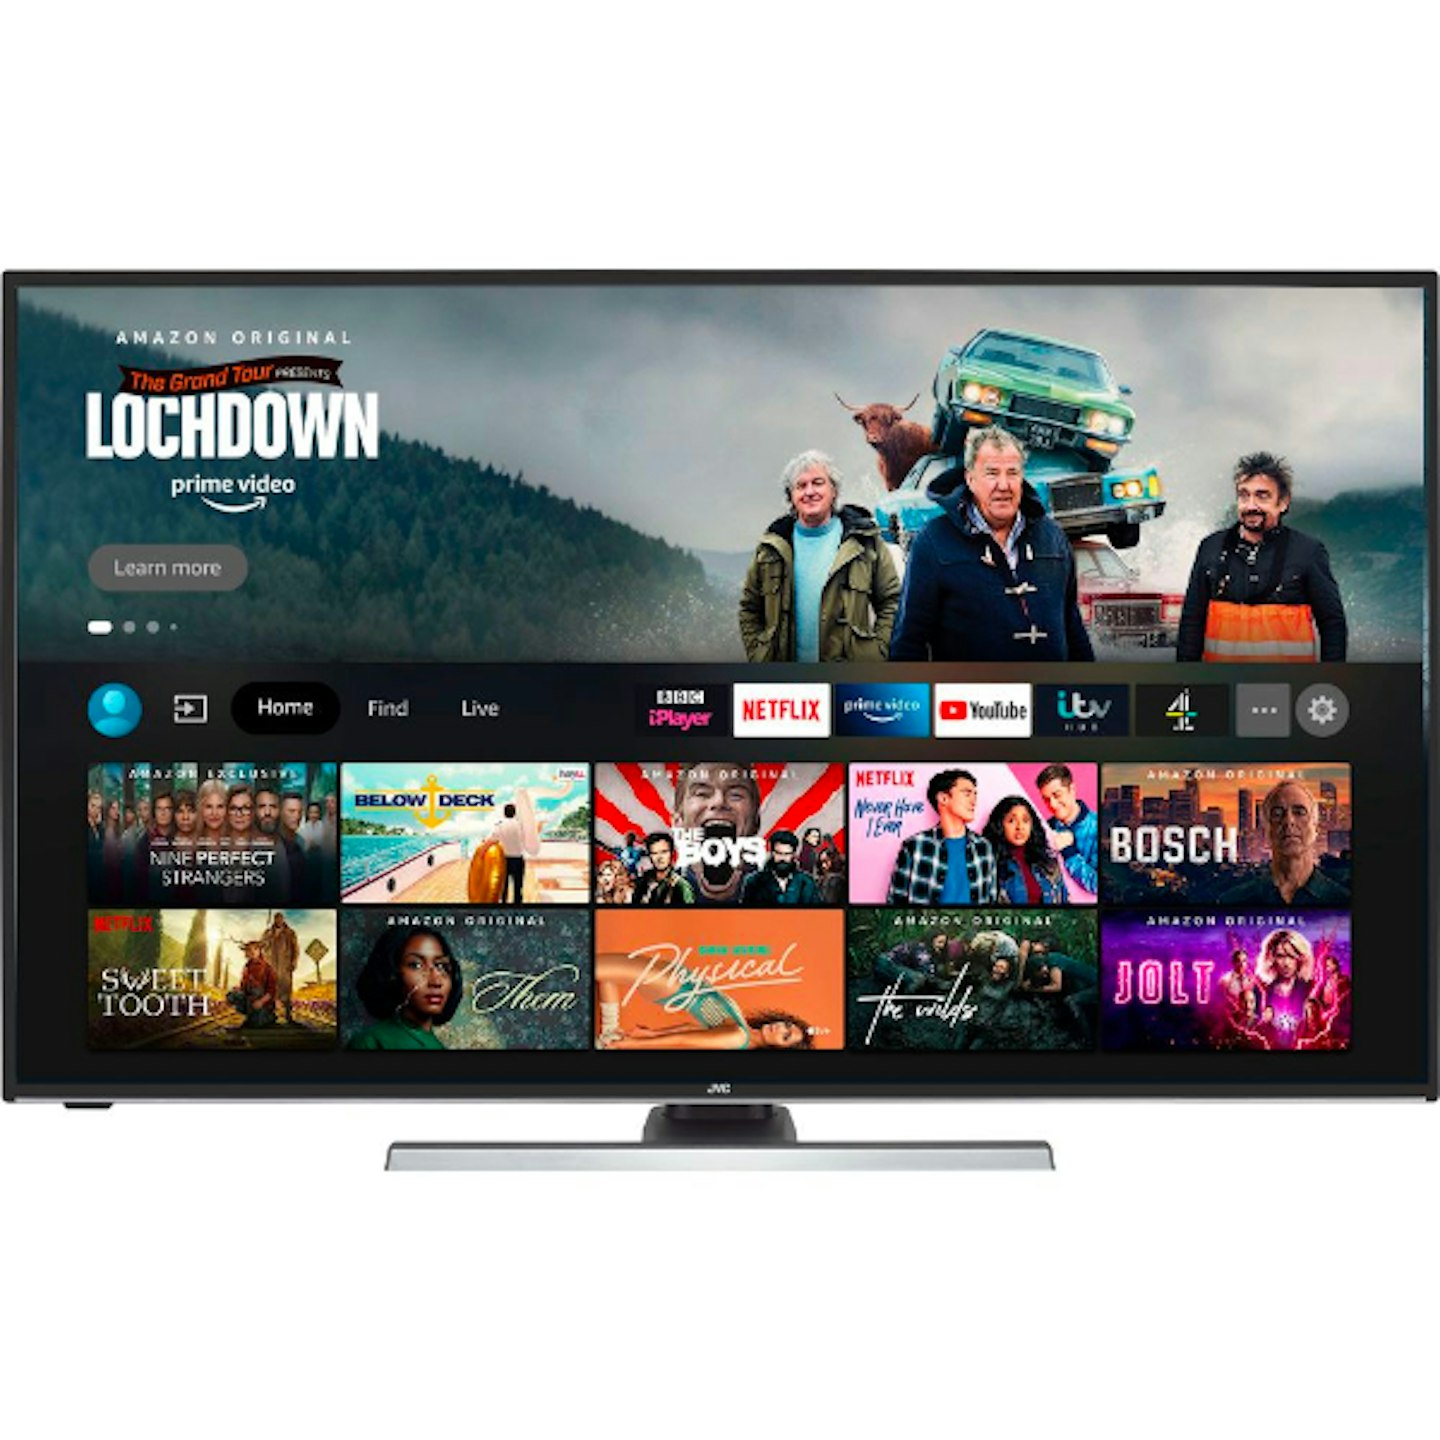 JVC LT-50CF890 Fire TV Edition 50" Smart 4K Ultra HD HDR LED TV with Amazon Alexa